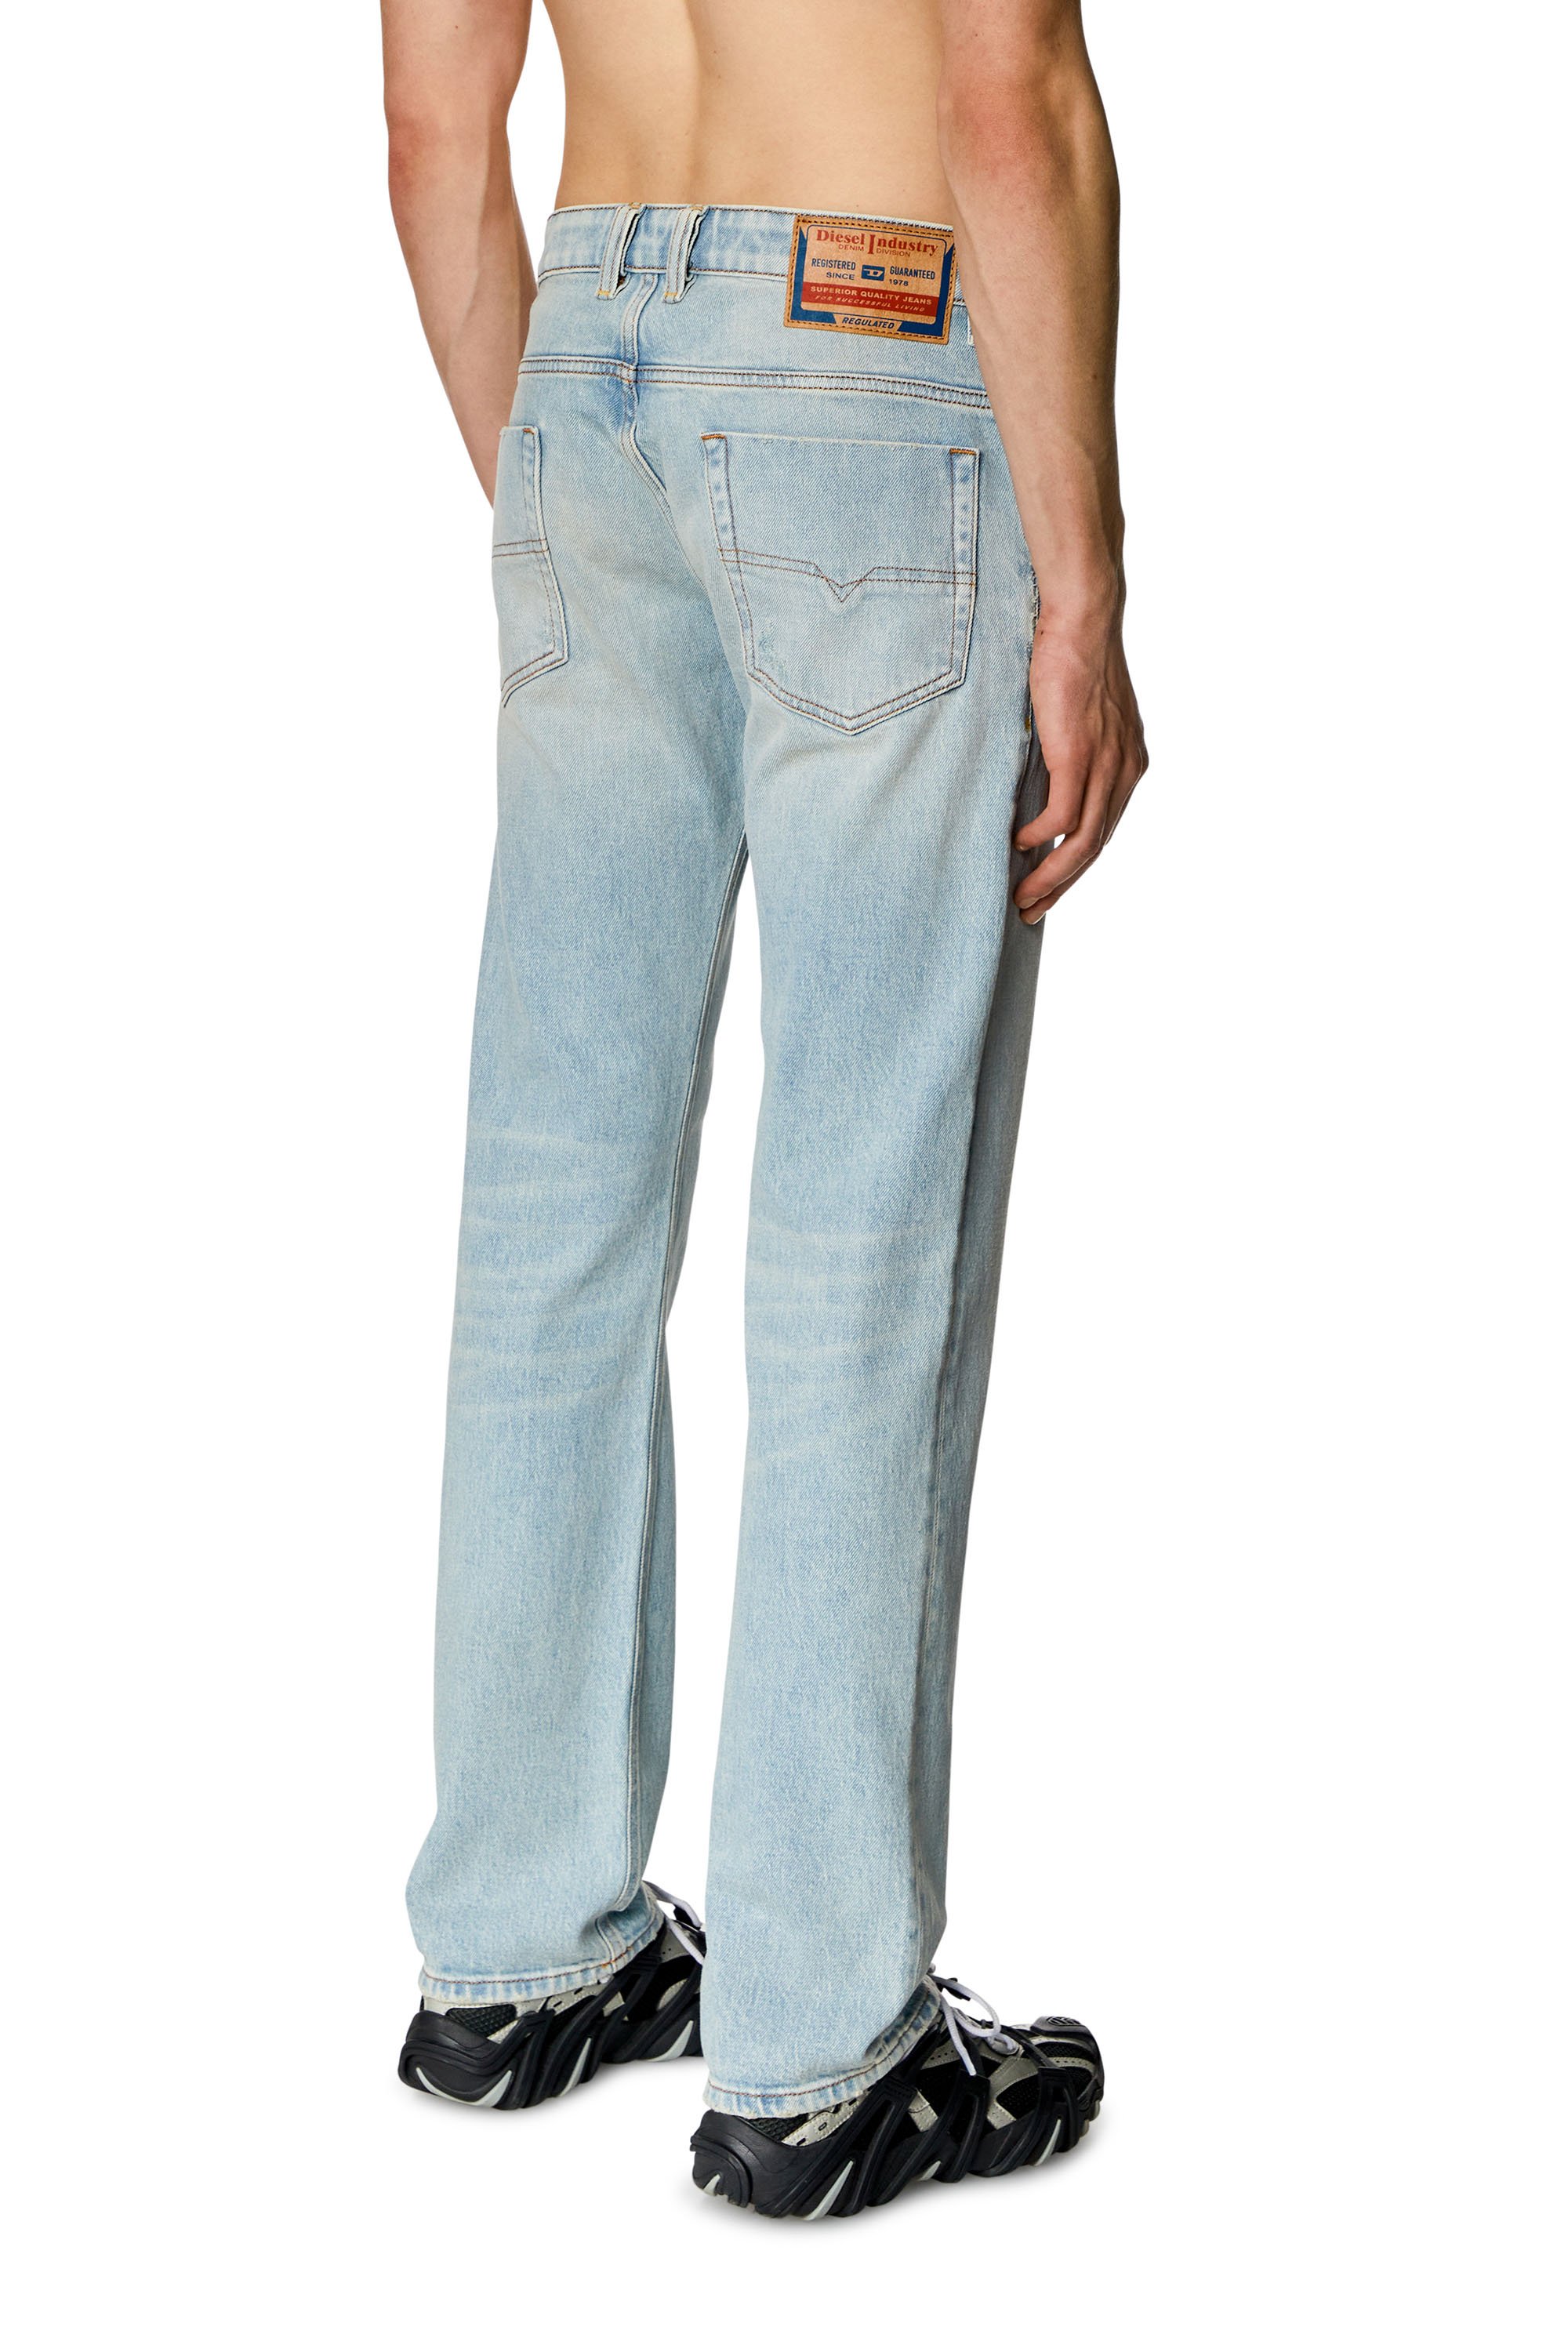 Men's Safado Jeans: Our Classic Straight Jeans | Diesel